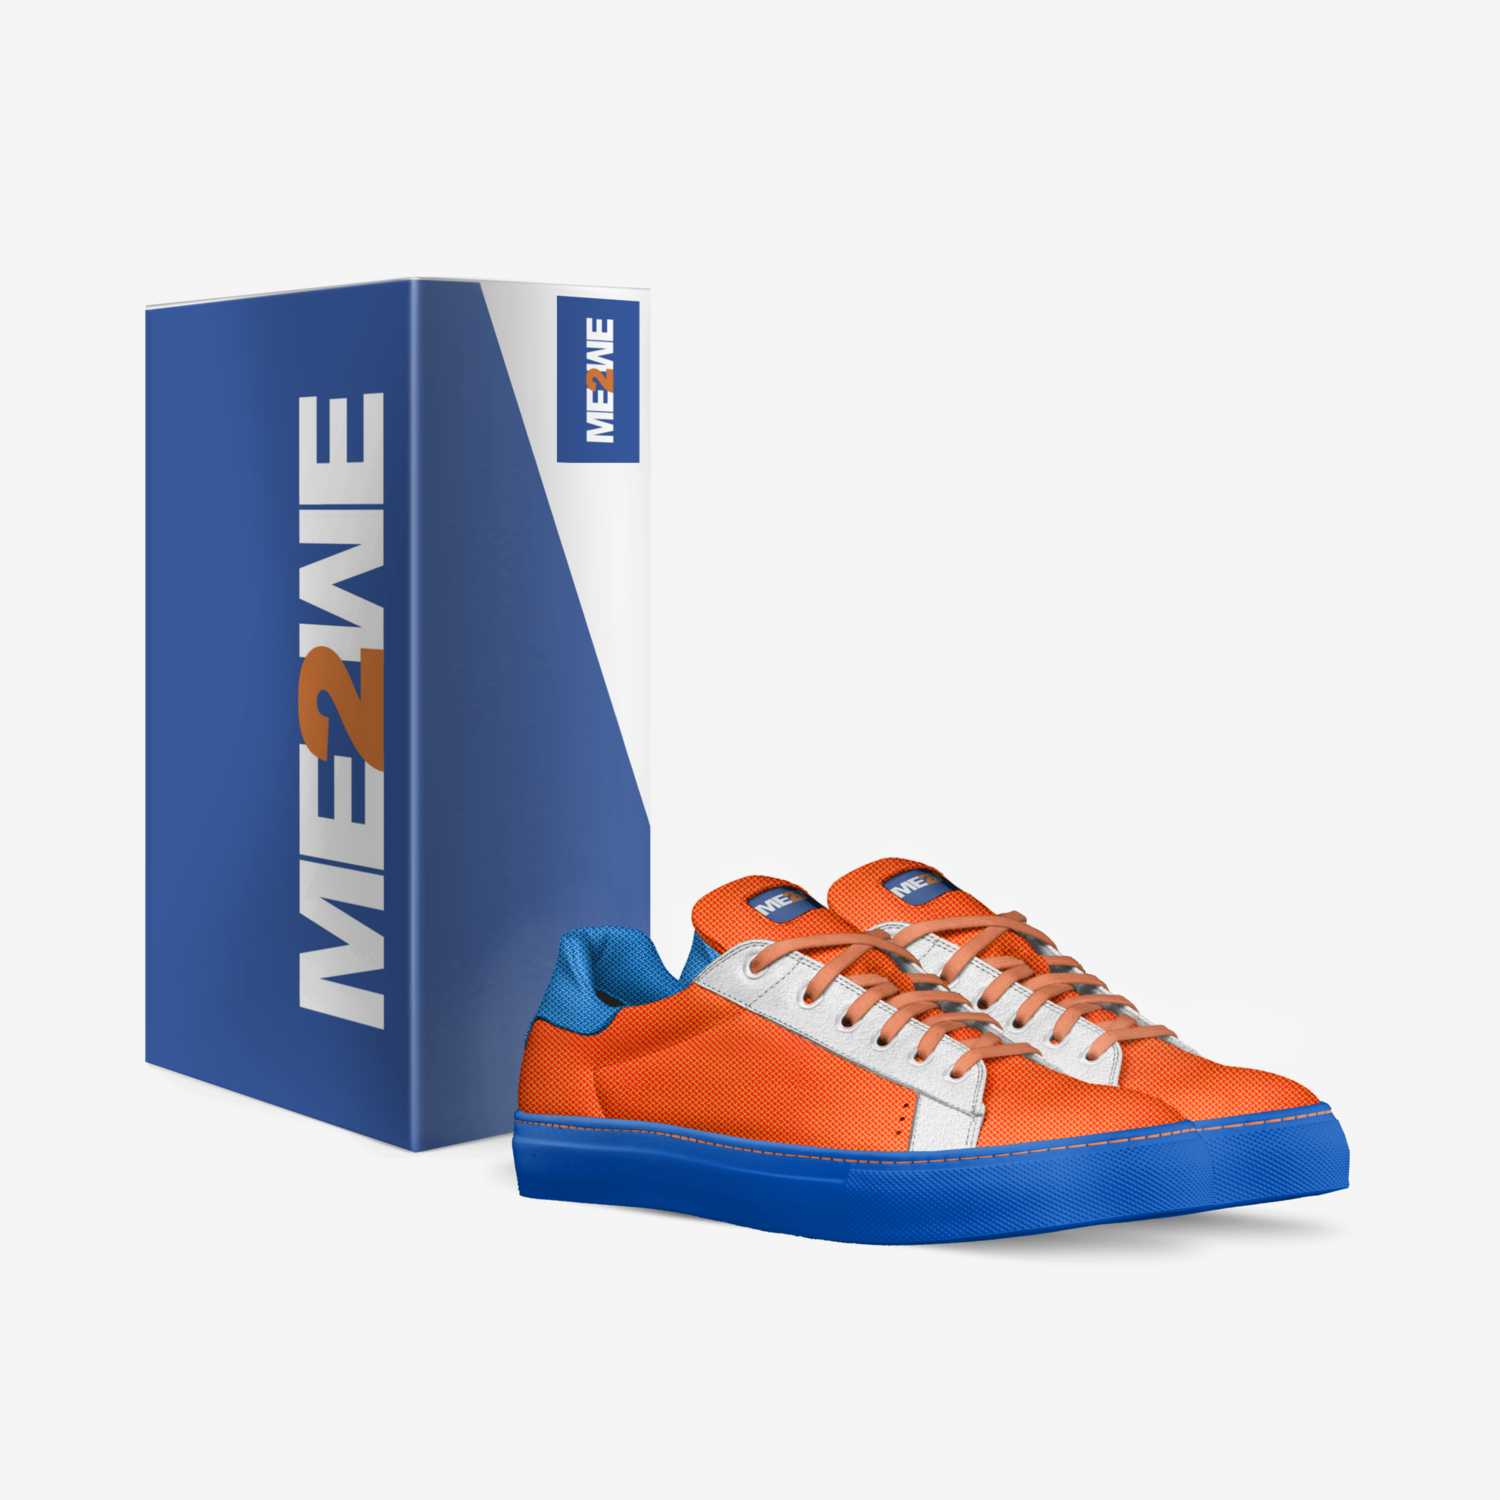 ME2WE ECO SNEAKS custom made in Italy shoes by Simplicio Michael Luis "m" Herrera | Box view